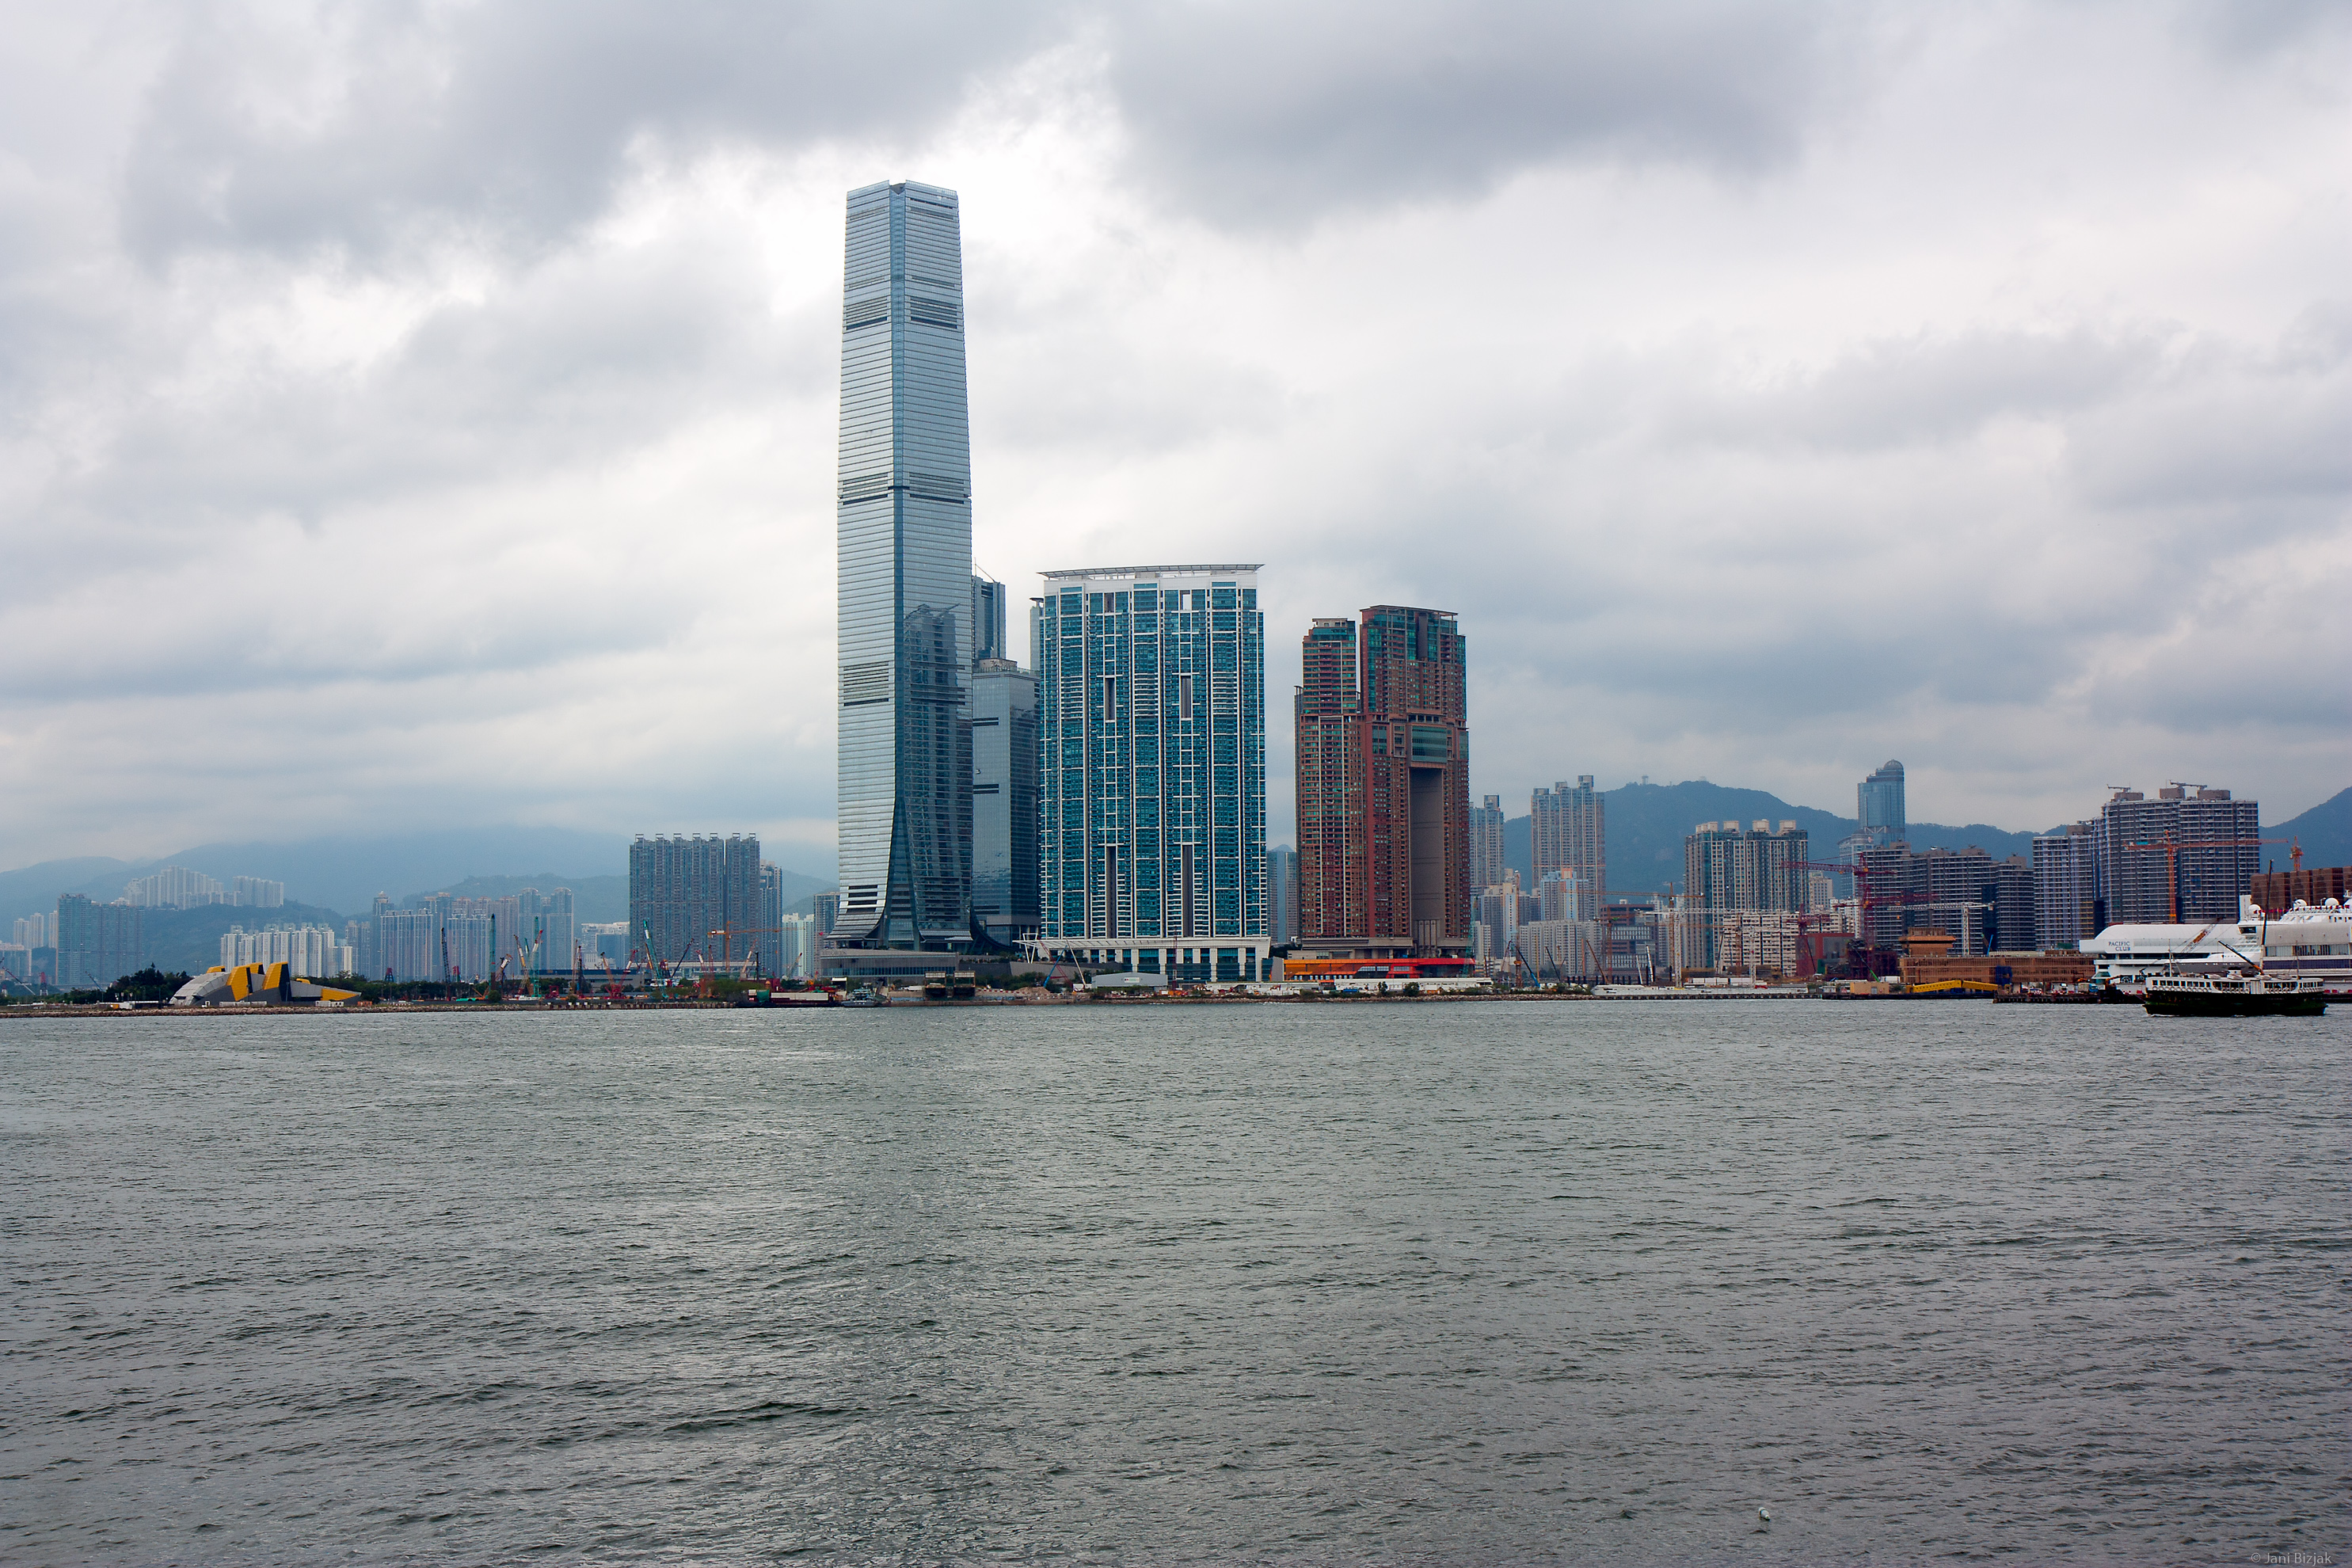 Highest building in HK